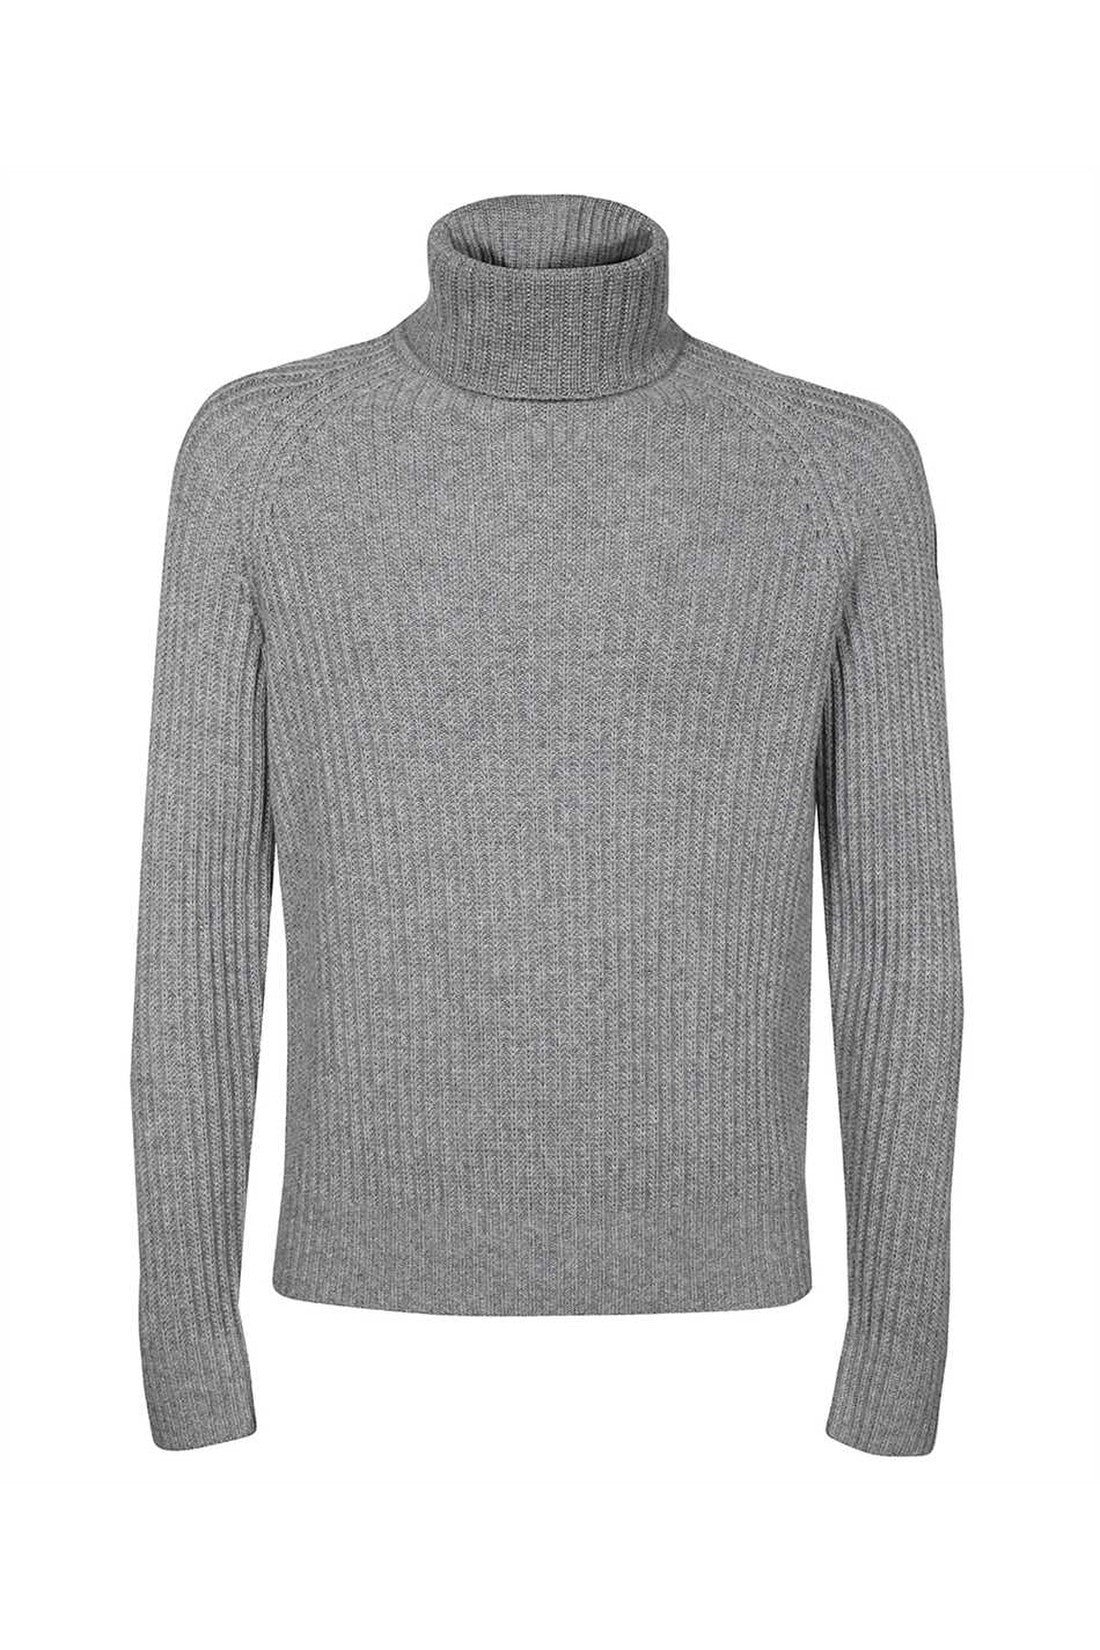 Wool turtleneck sweater-Parajumpers-OUTLET-SALE-3XL-ARCHIVIST